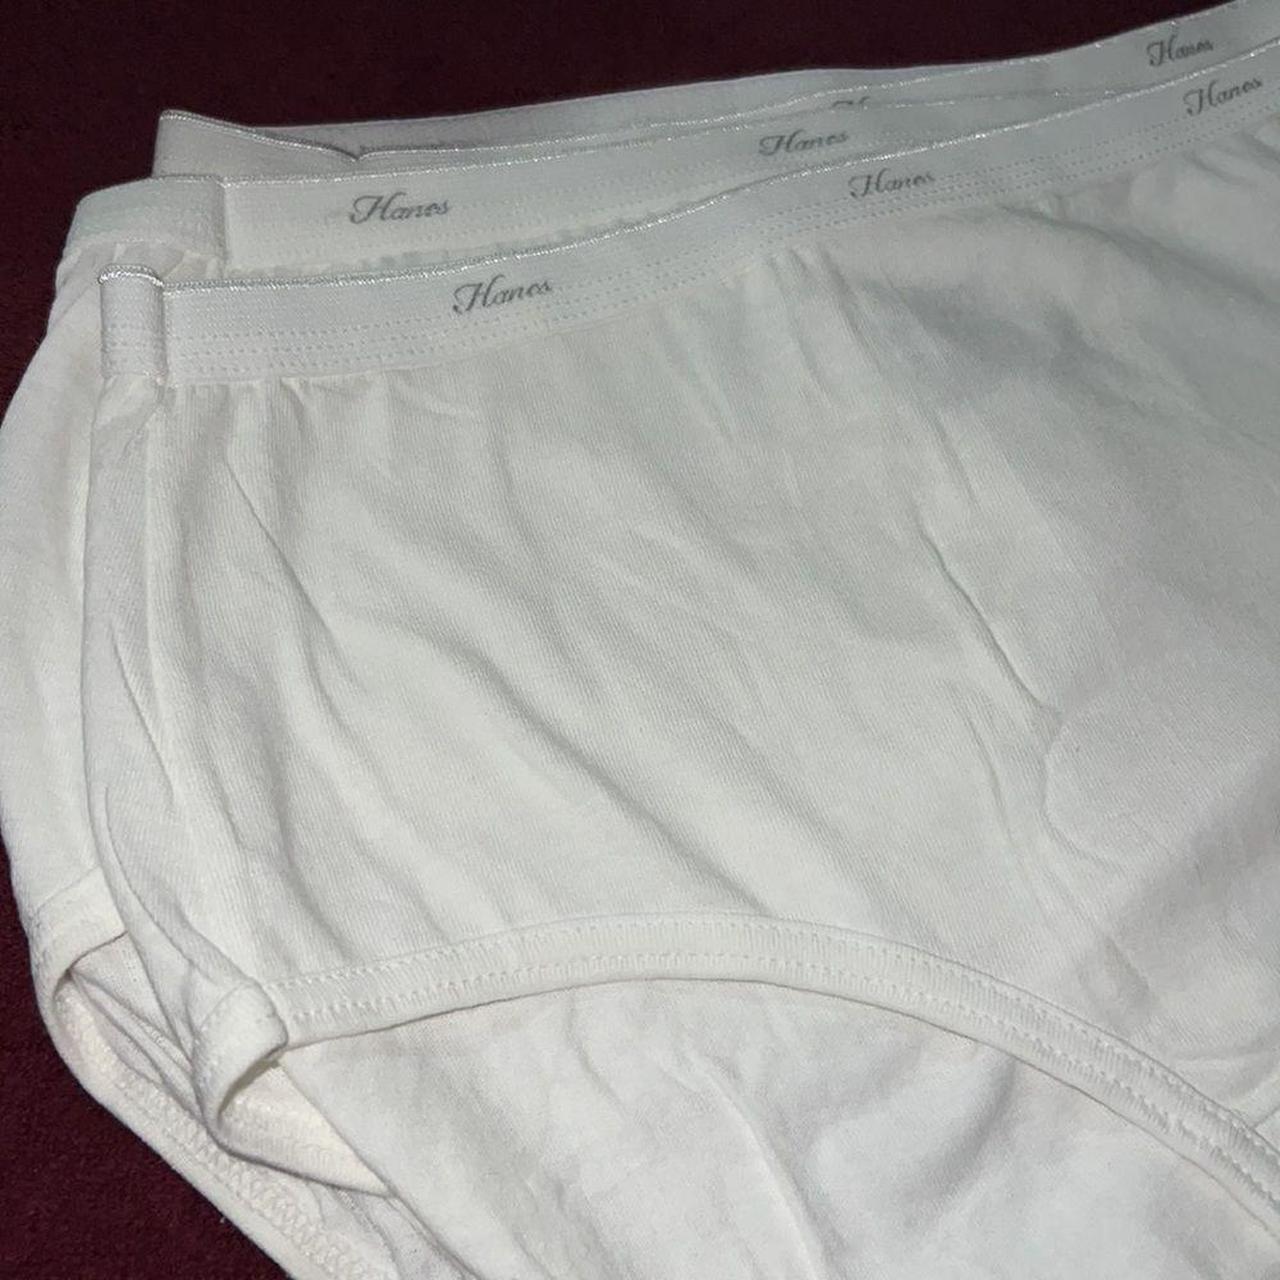 Hanes Women's White Brief Panties